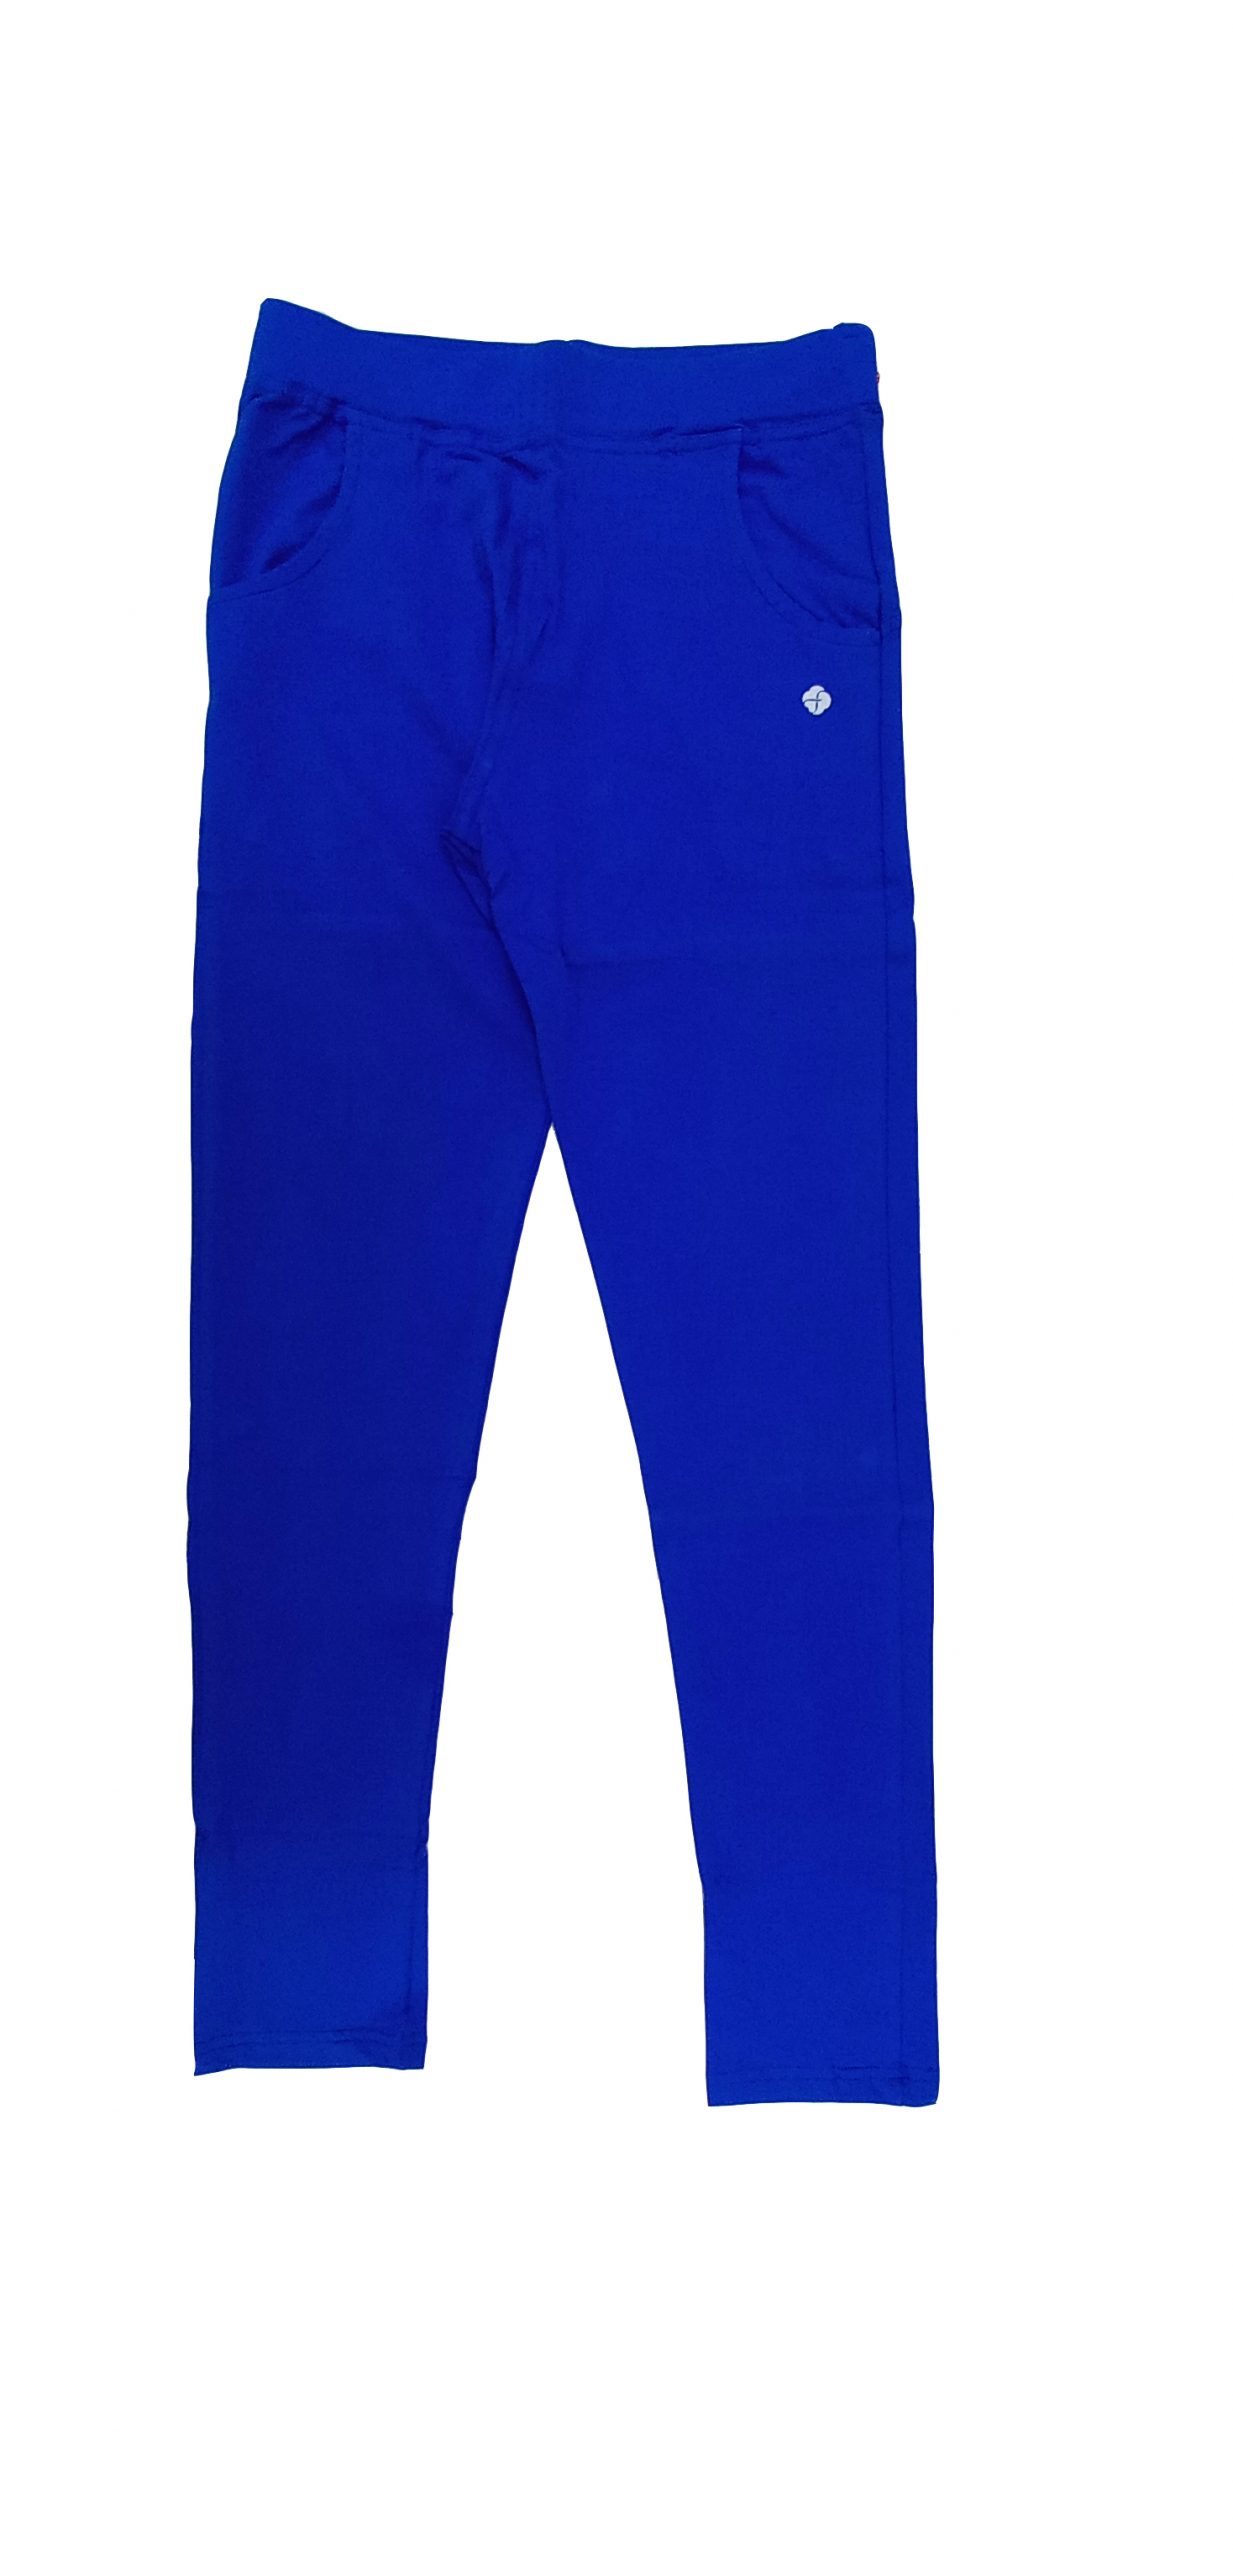 Buy TAG 7 Plus Women Royal Blue Kurti Pant - 28 at Amazon.in